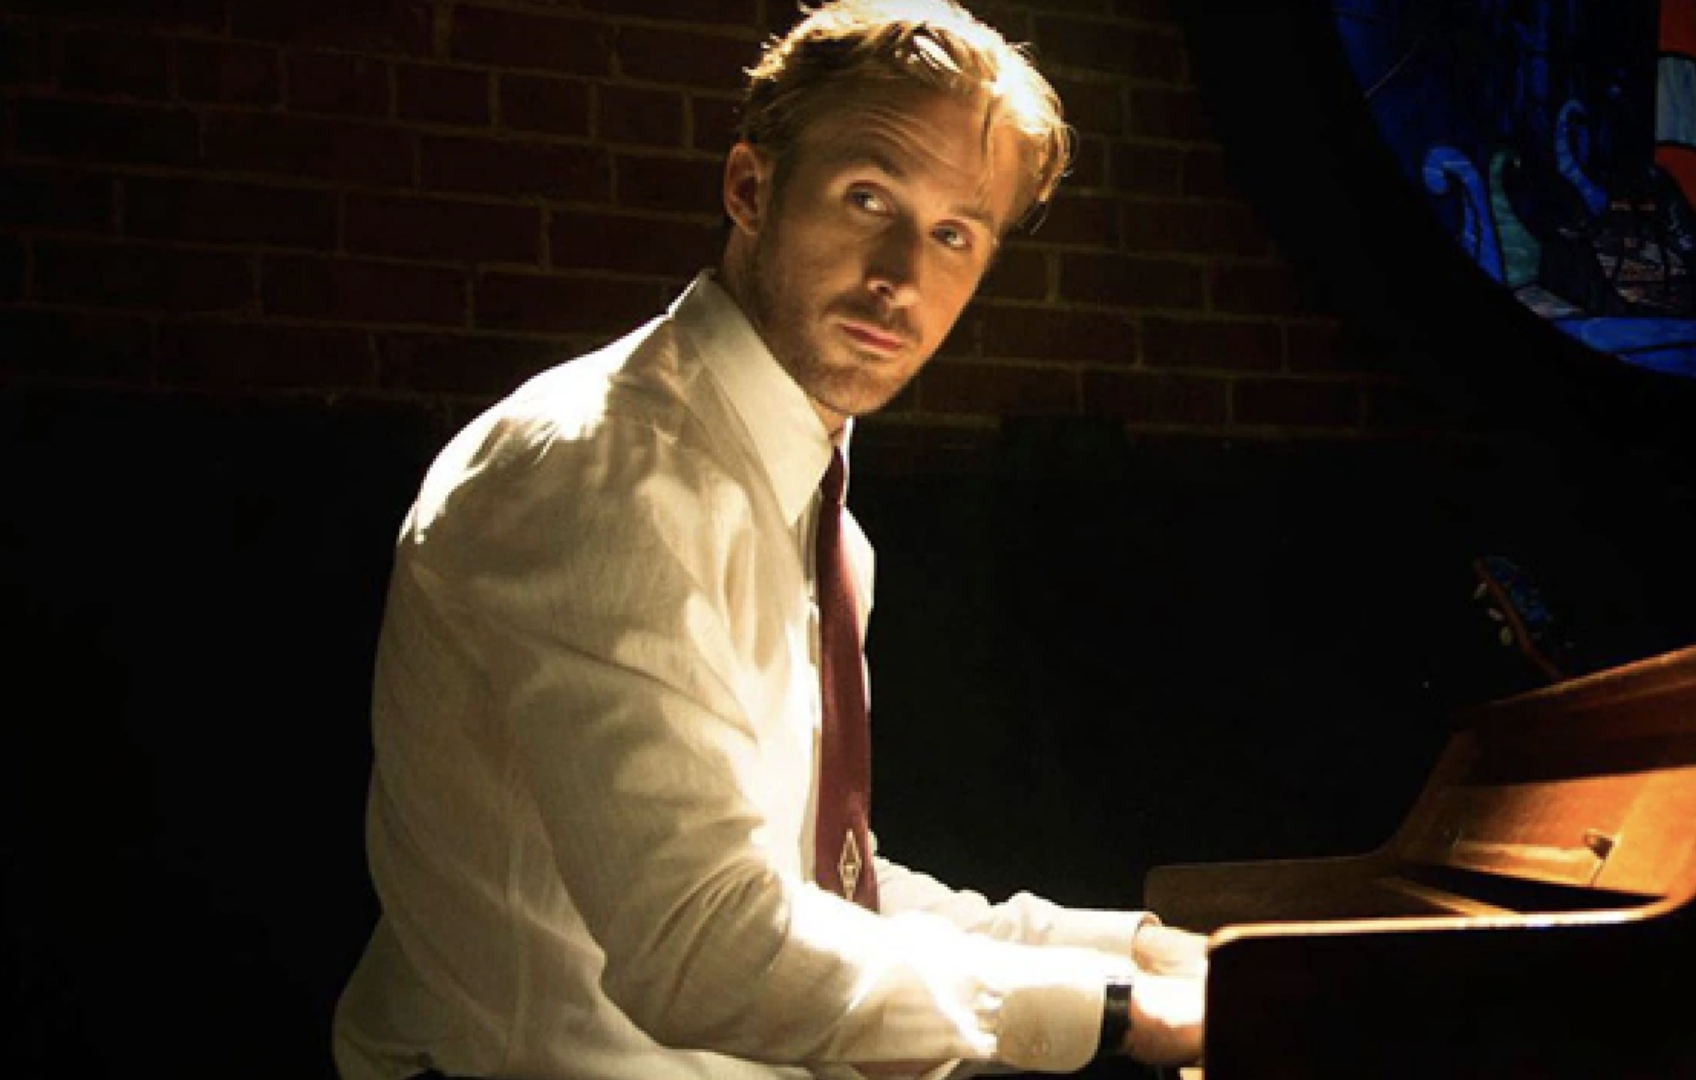 Ryan Gosling playing the piano